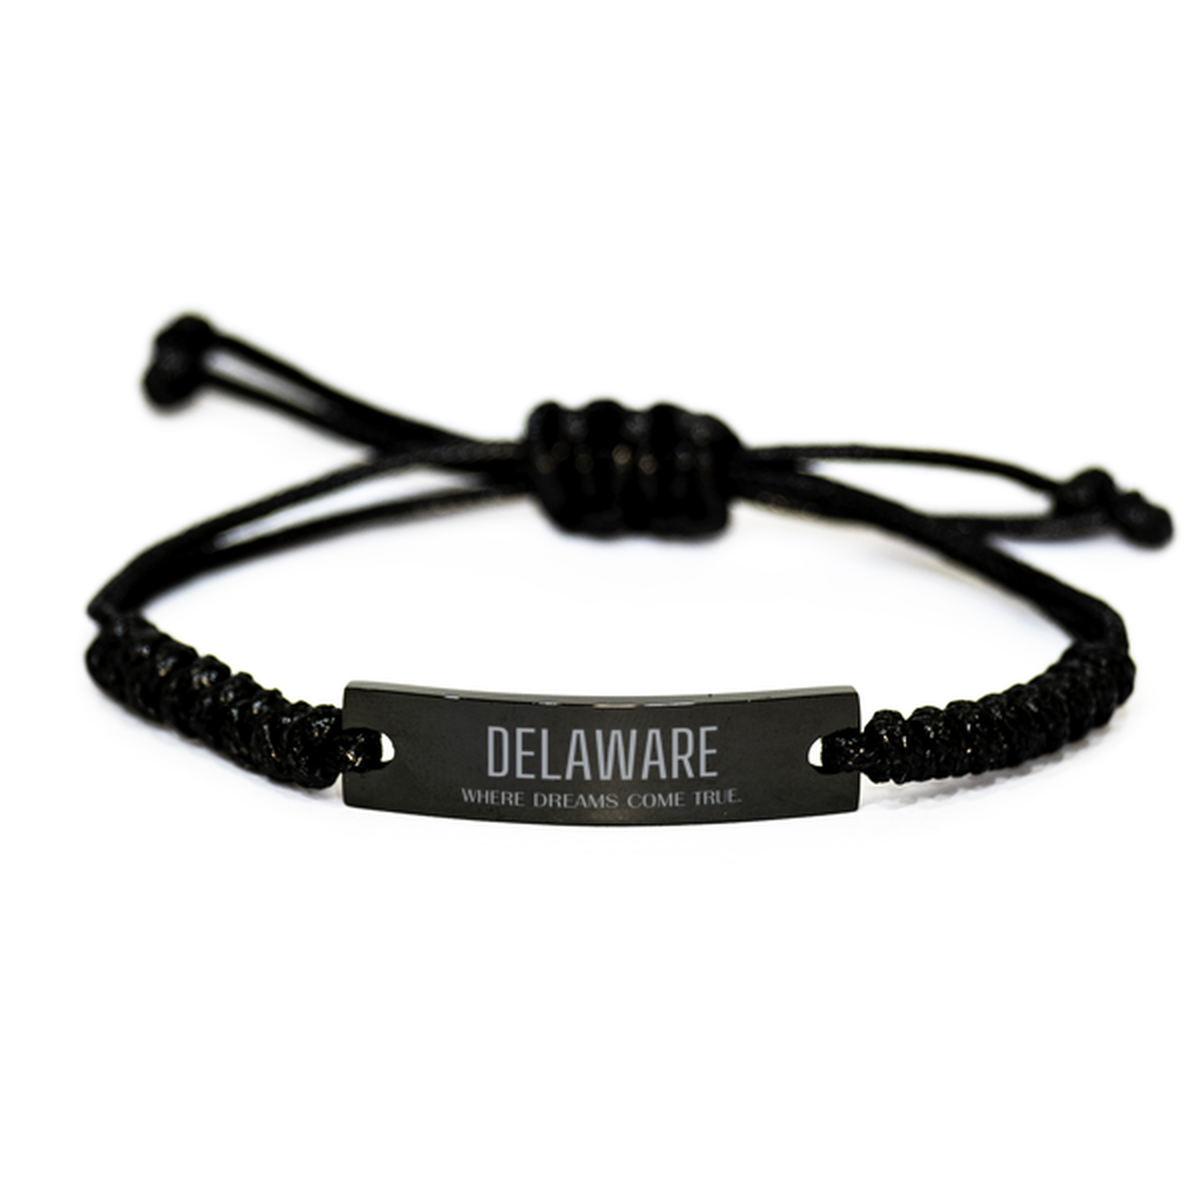 Love Delaware State Black Rope Bracelet, Delaware Where dreams come true, Birthday Inspirational Gifts For Delaware Men, Women, Friends